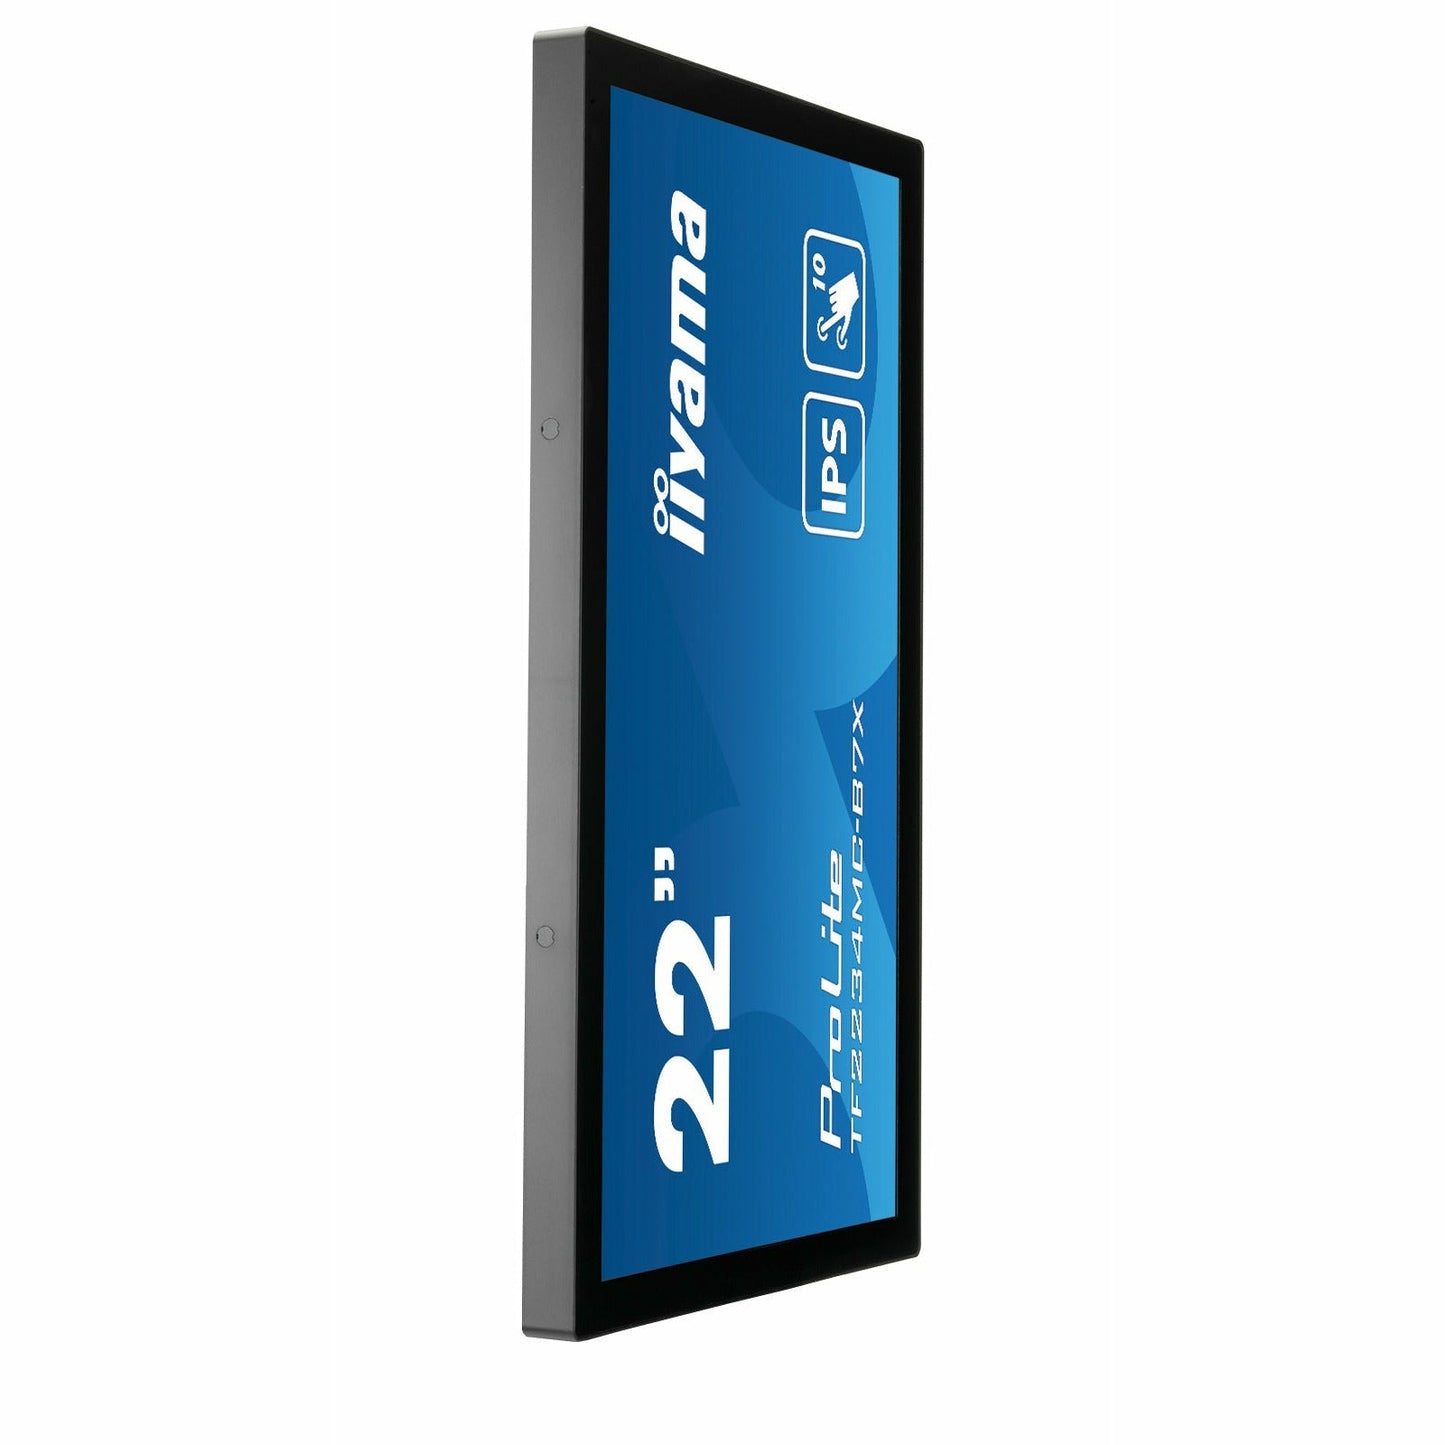 Dark Cyan iiyama ProLite TF2234MC-B7AGB 22" Capacitive Touch Screen IPS Display